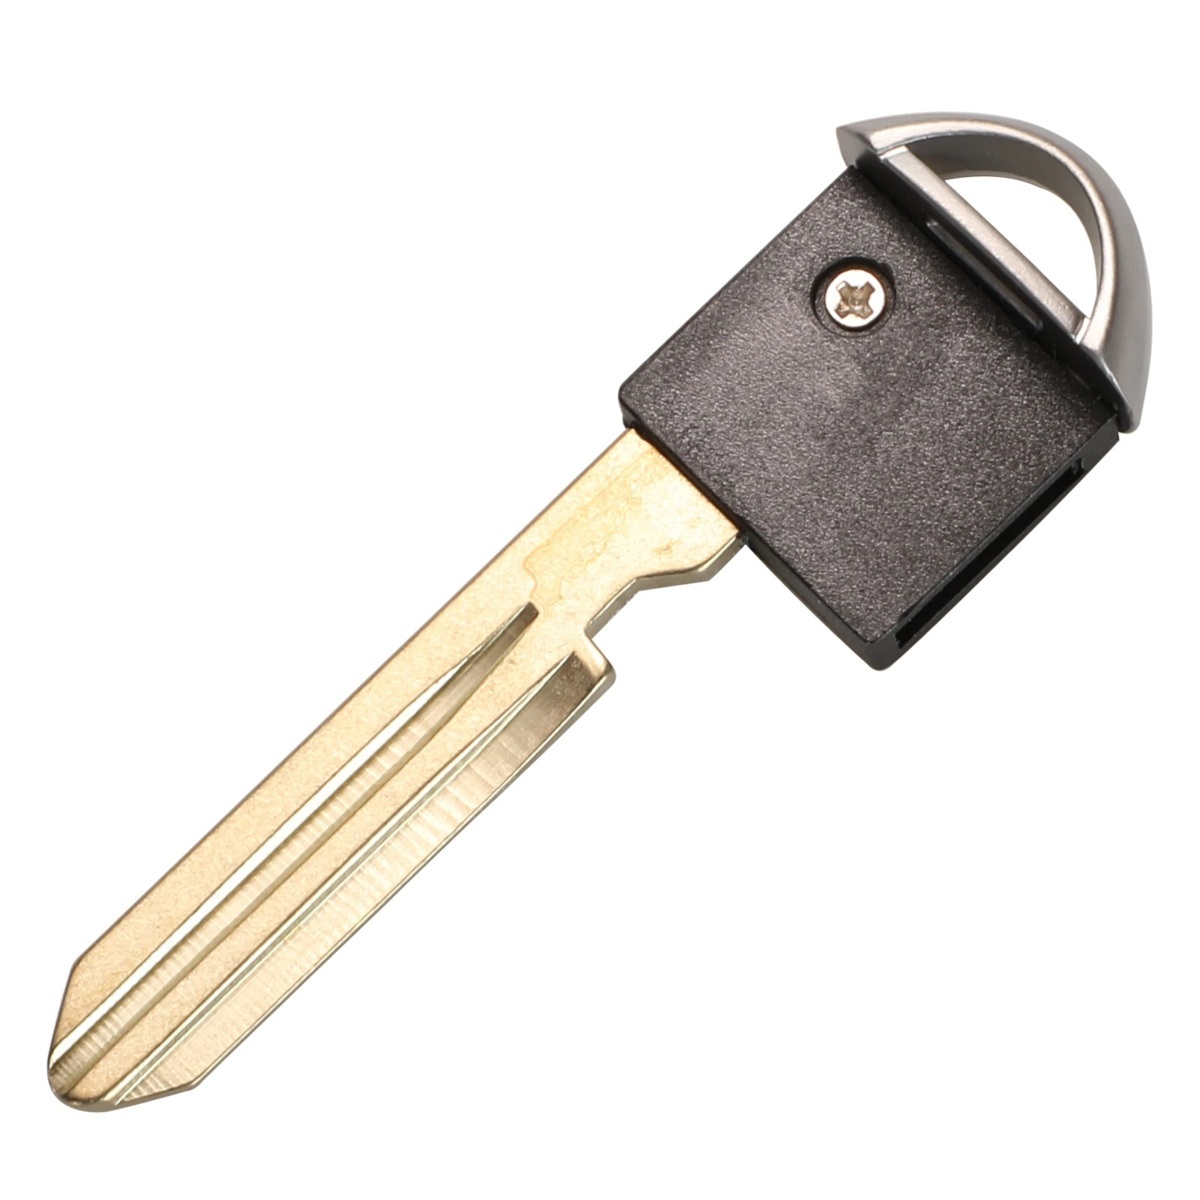 # Nissan intelligent key for smart key blank key spare key key mechanical key *NISSAN 1-1